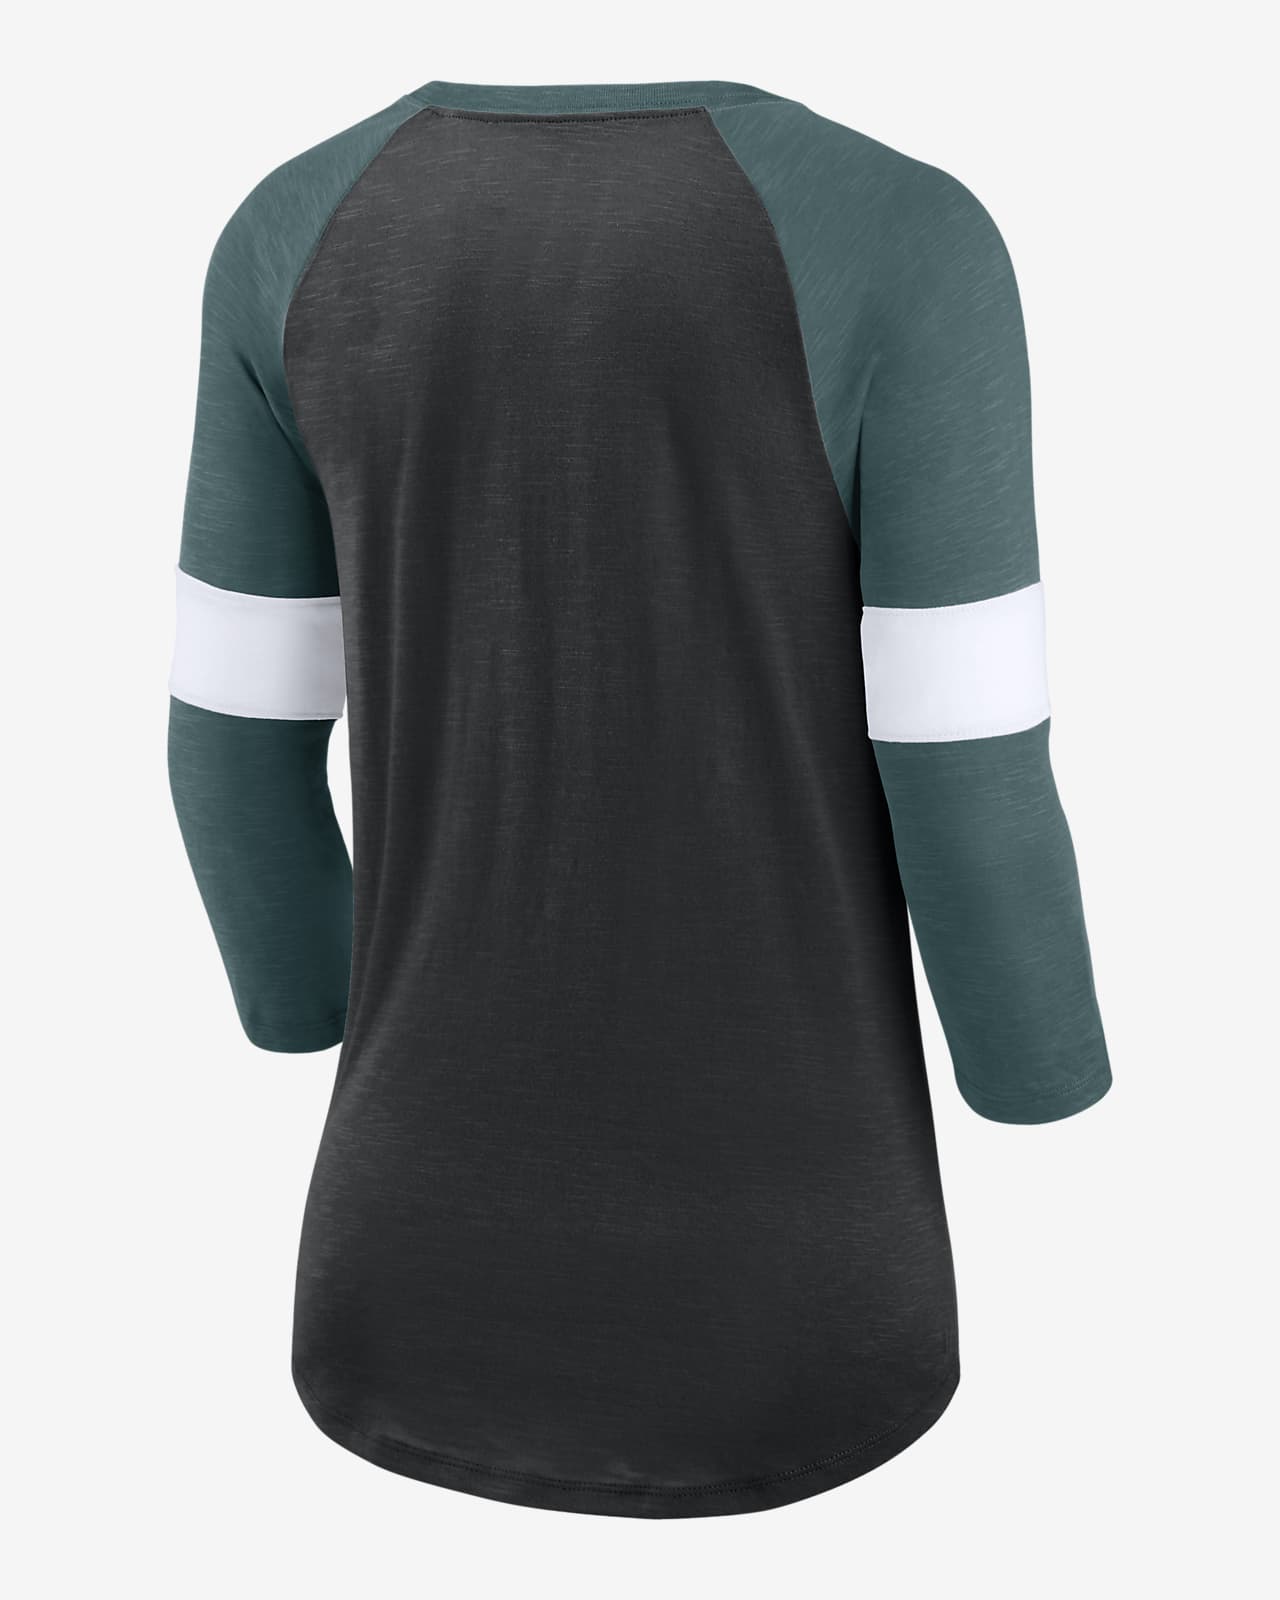 Men's Nike Gray Philadelphia Phillies 3/4-Sleeve Raglan T-Shirt